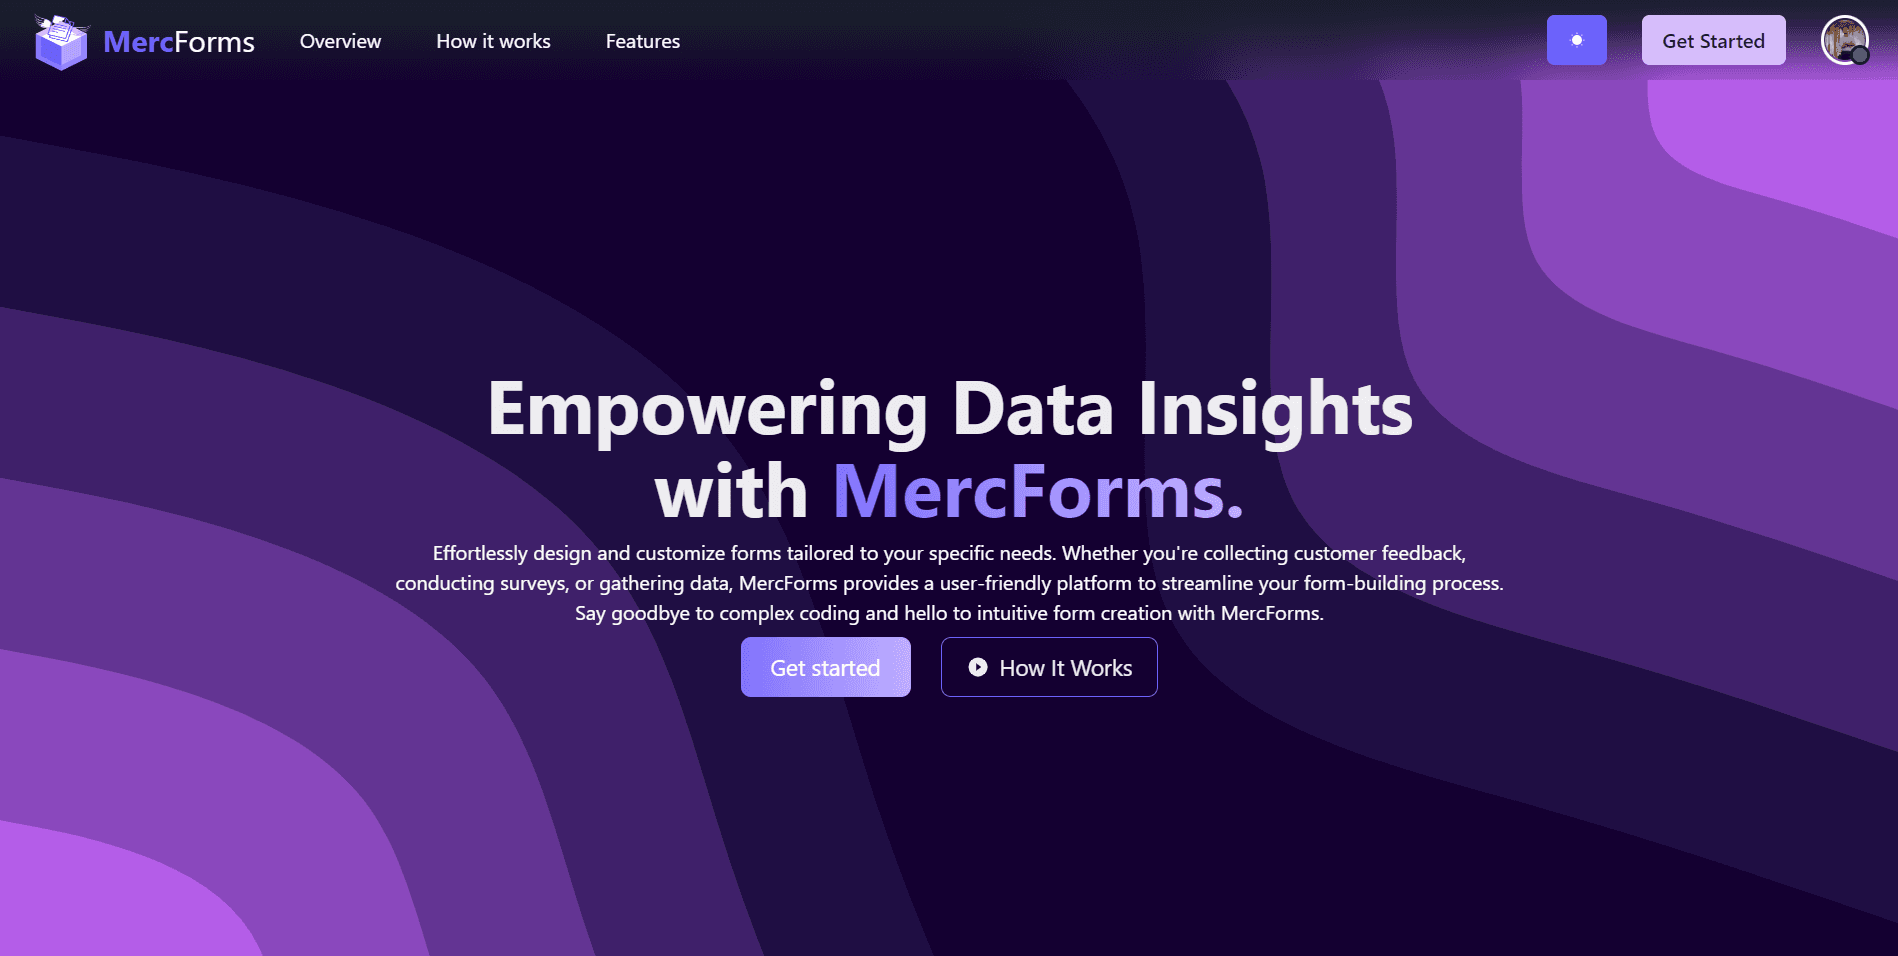 MercForms